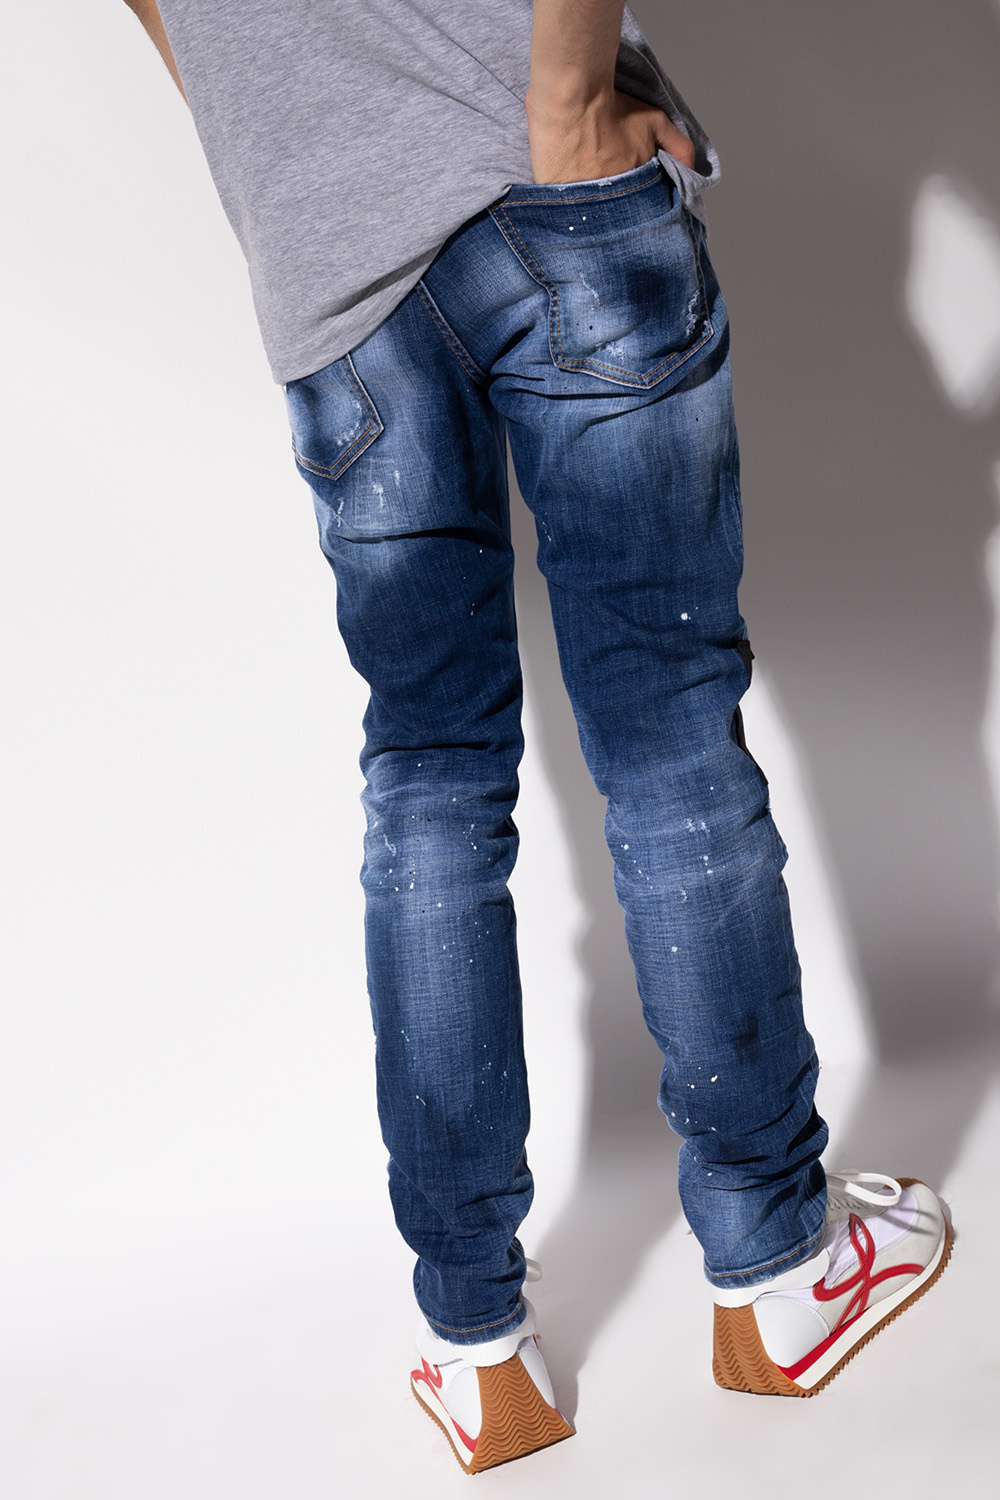 Dsquared2 ‘Cool Guy’ jeans | Men's Clothing | Vitkac